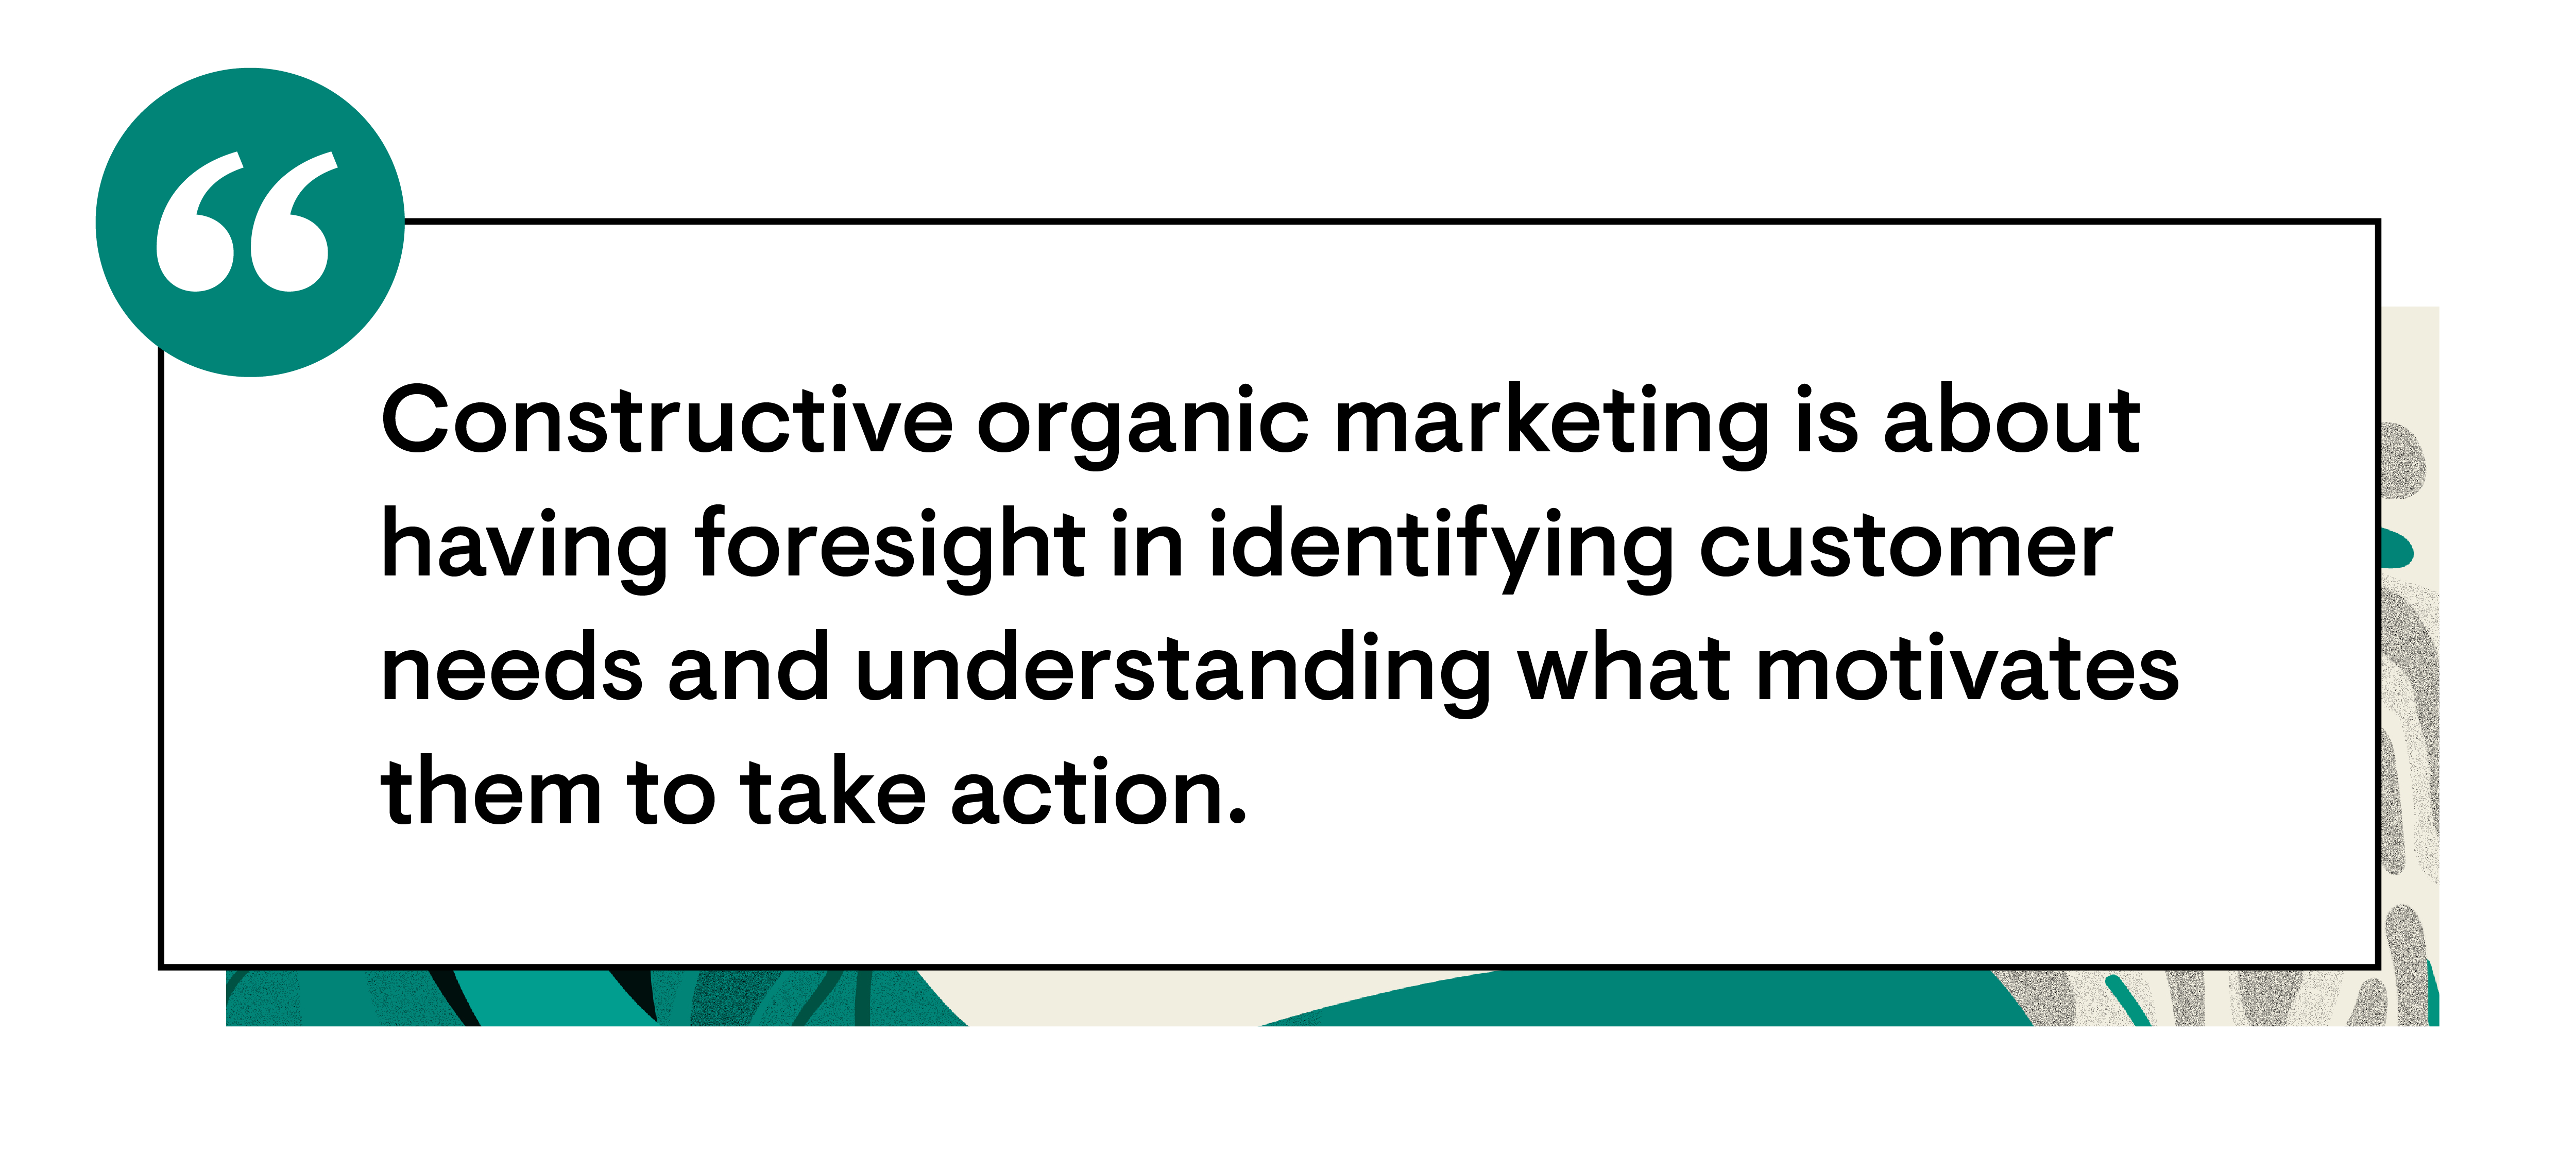 What is organic marketing